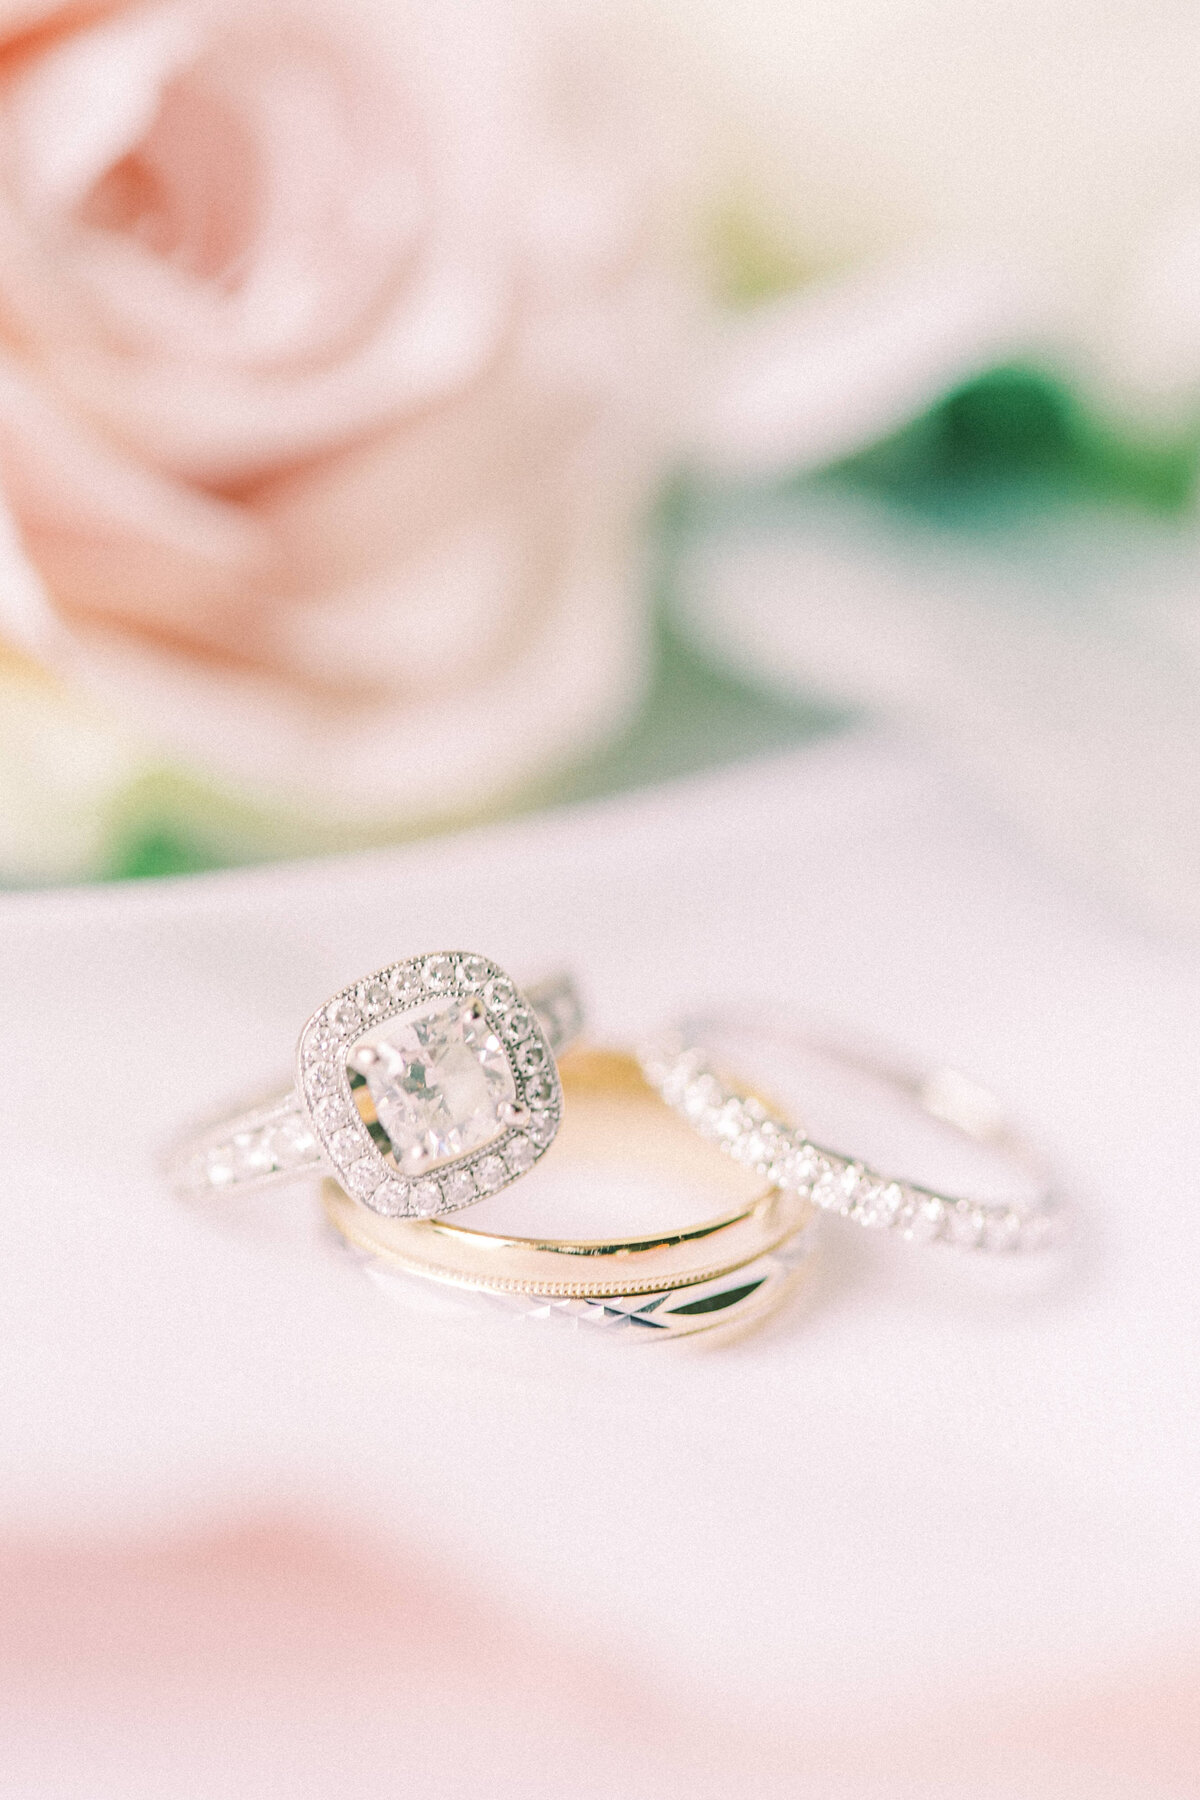 Wedding rings detail shot with blush pink florals